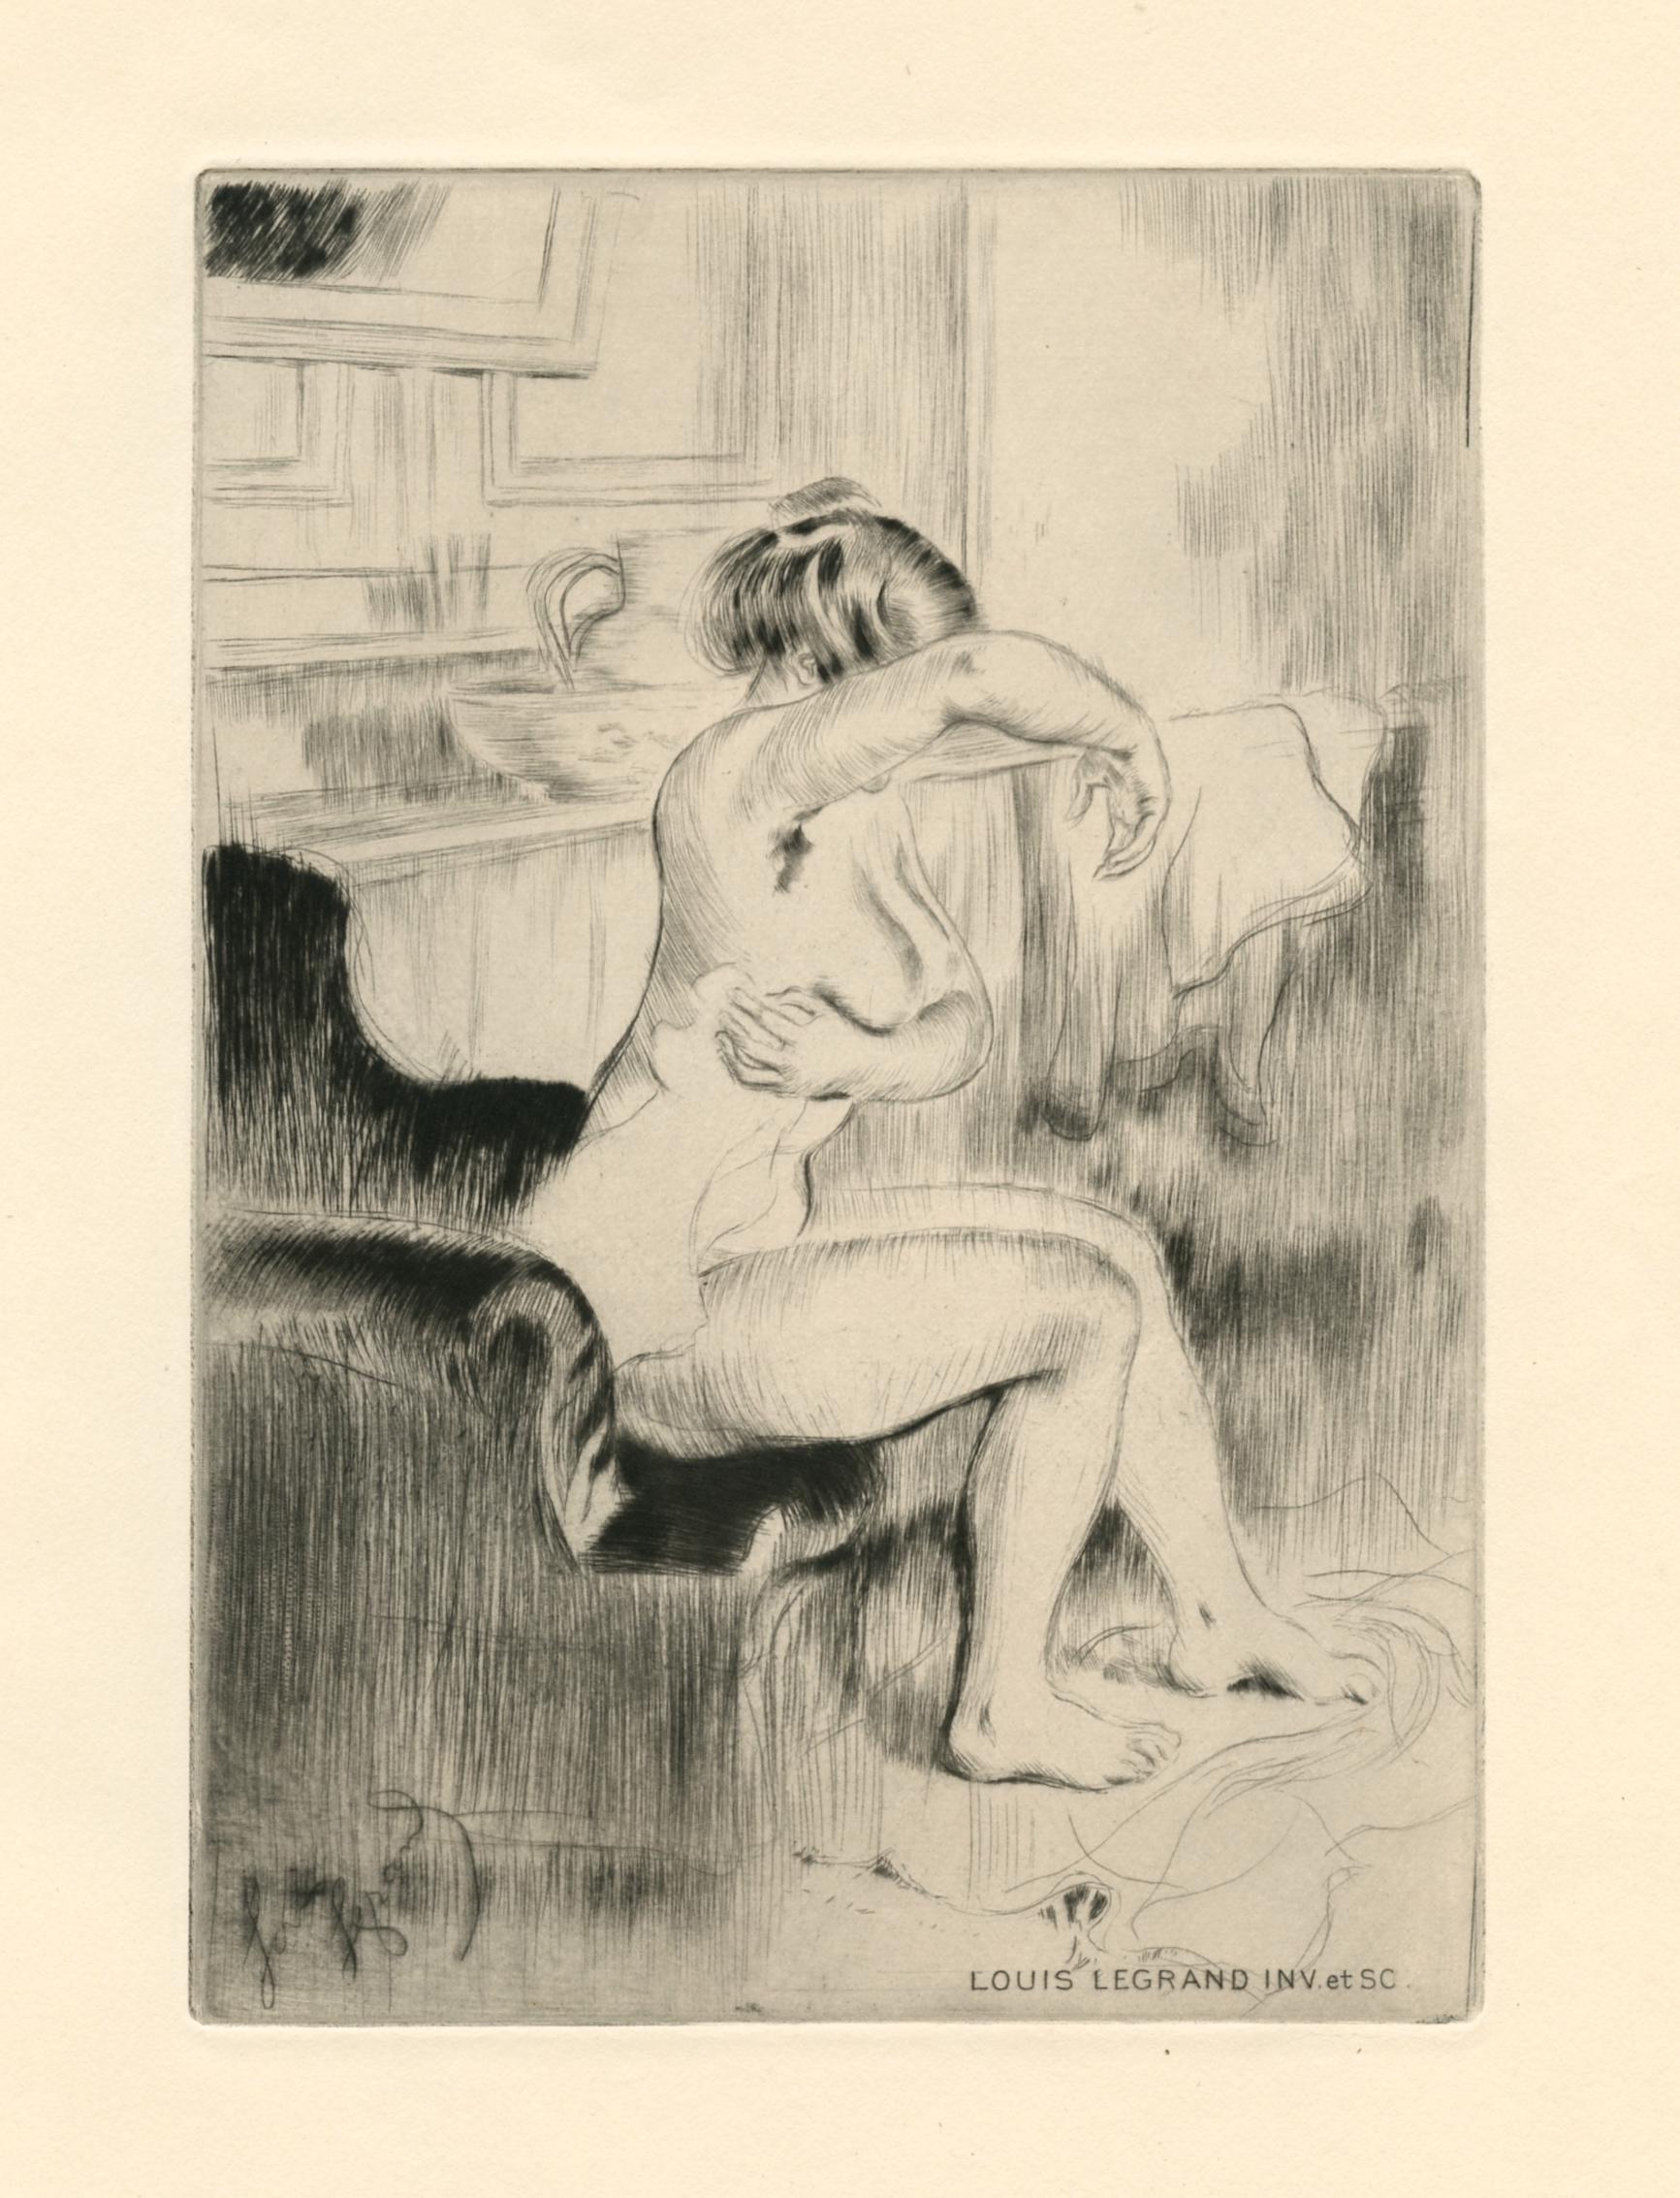 Louis Legrand Nude Print - "La Toilette" original etching